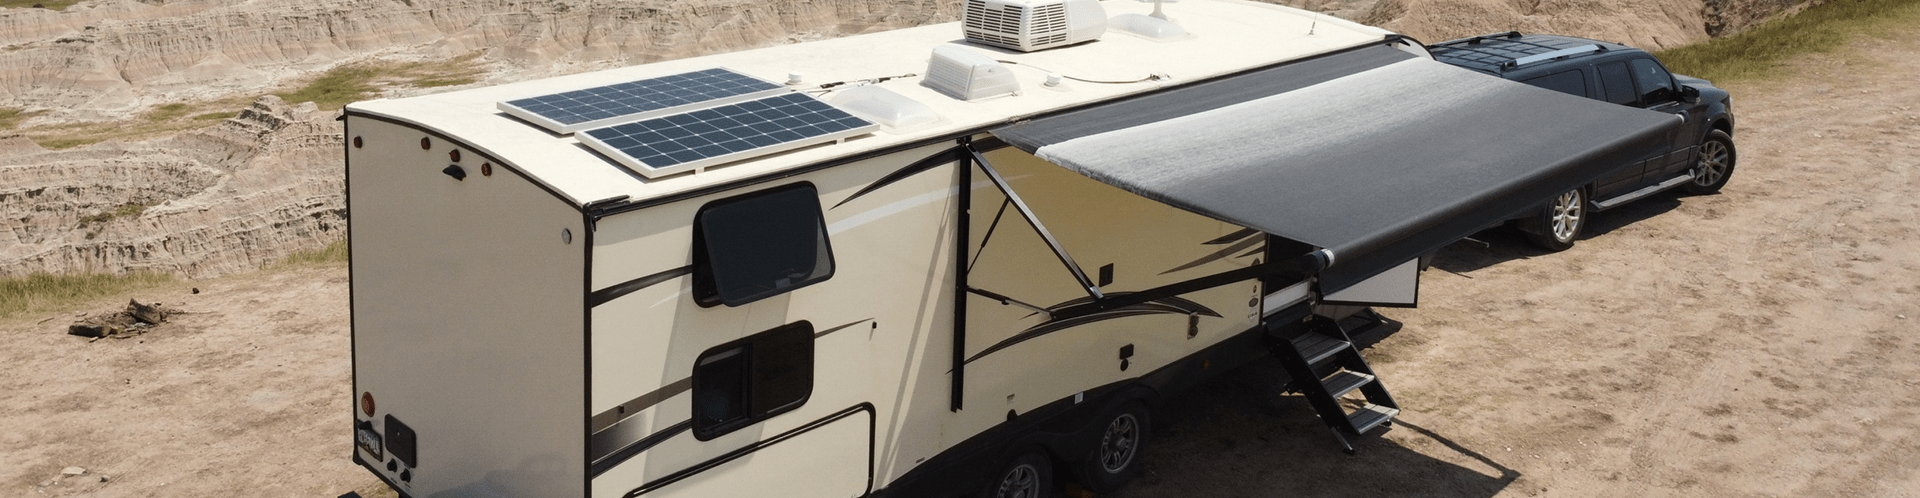 CamperPower - Camper Elektrik Komplettset Solar BASIC